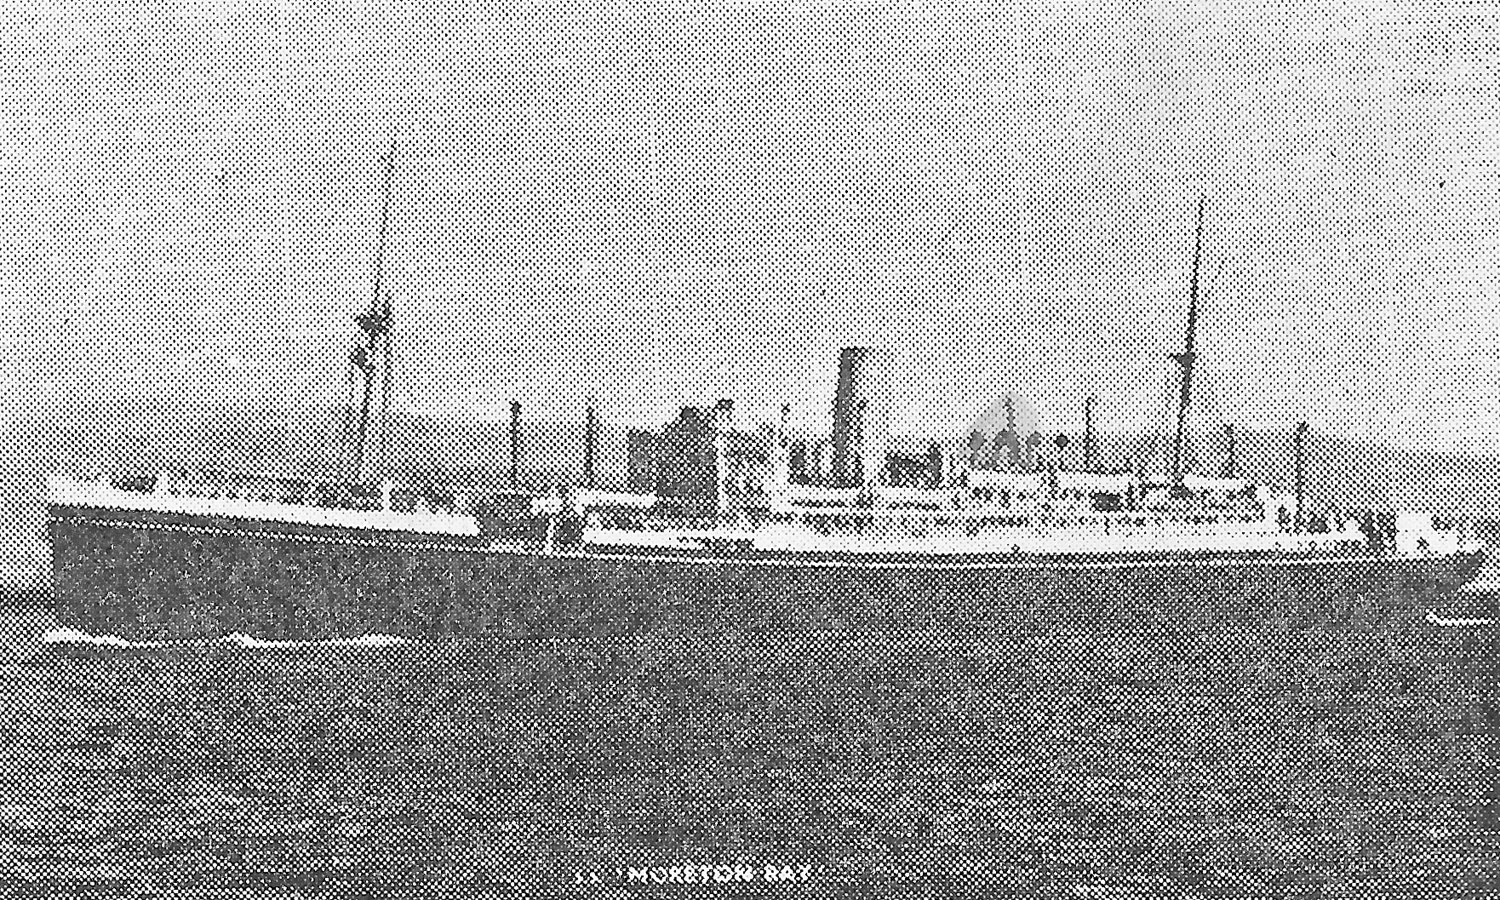 SS Moreton Bay 1950s